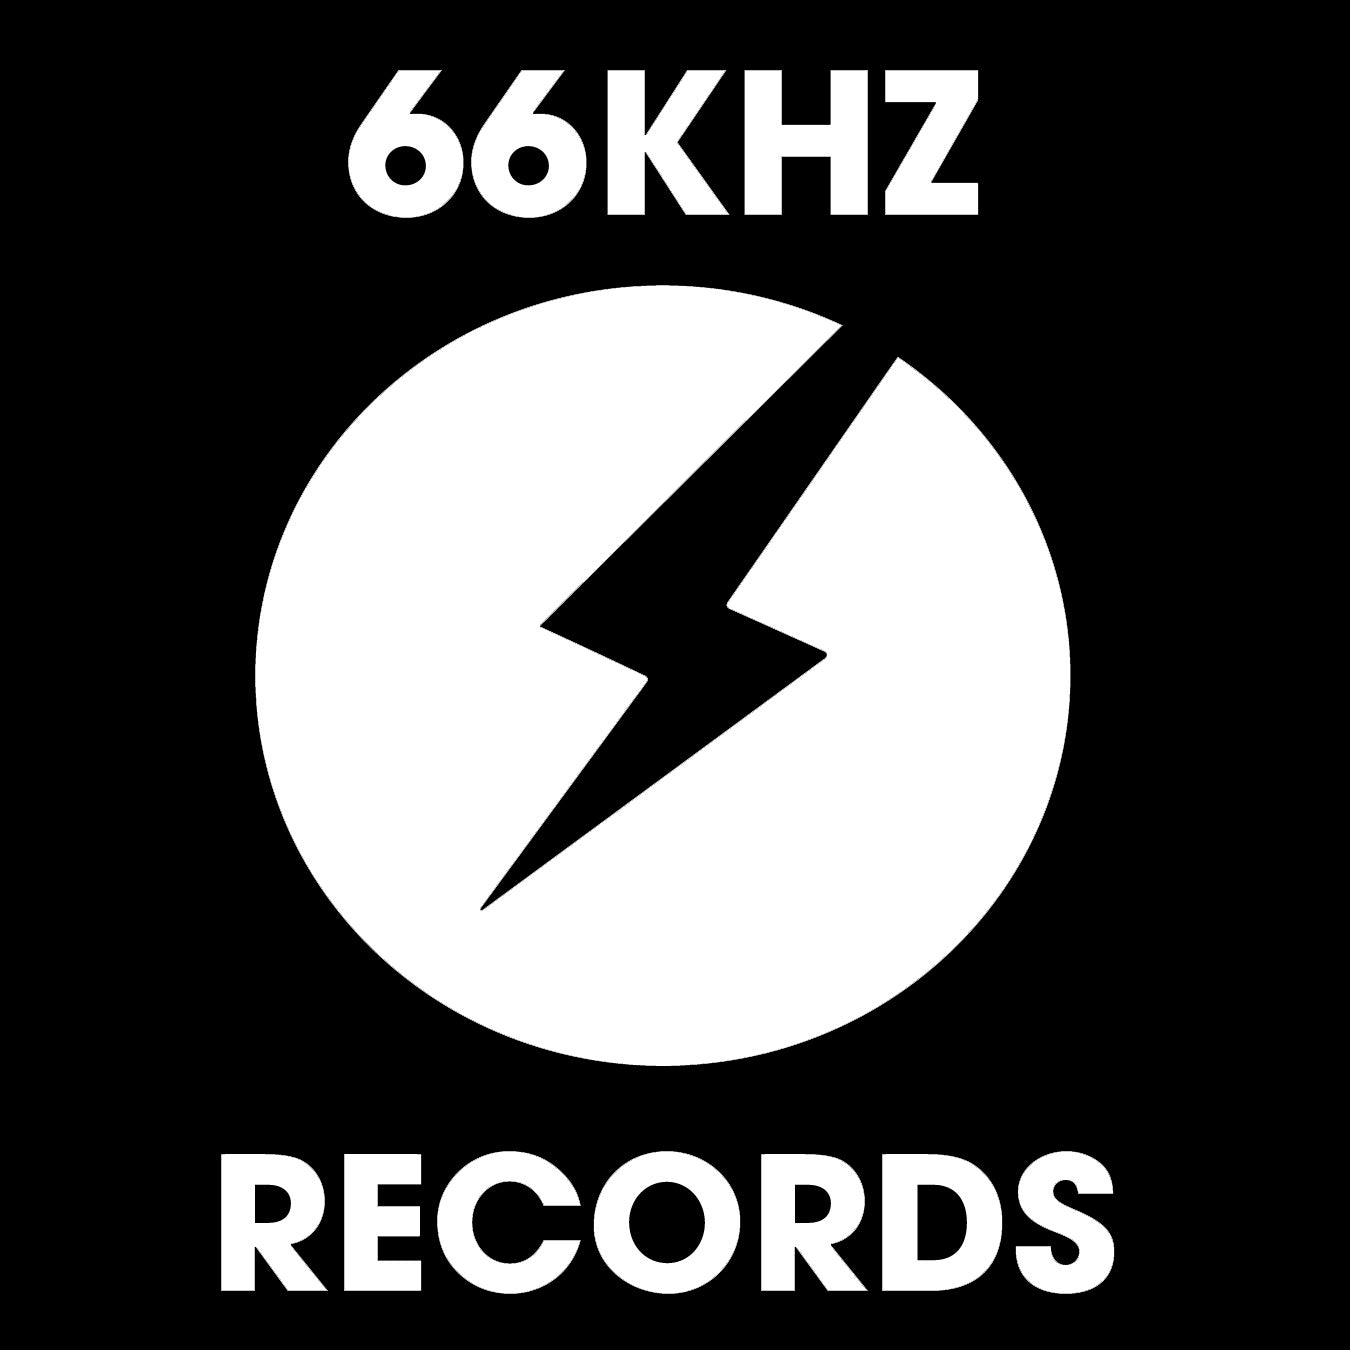 66KHZ RECORDS aka 66Khz Productions